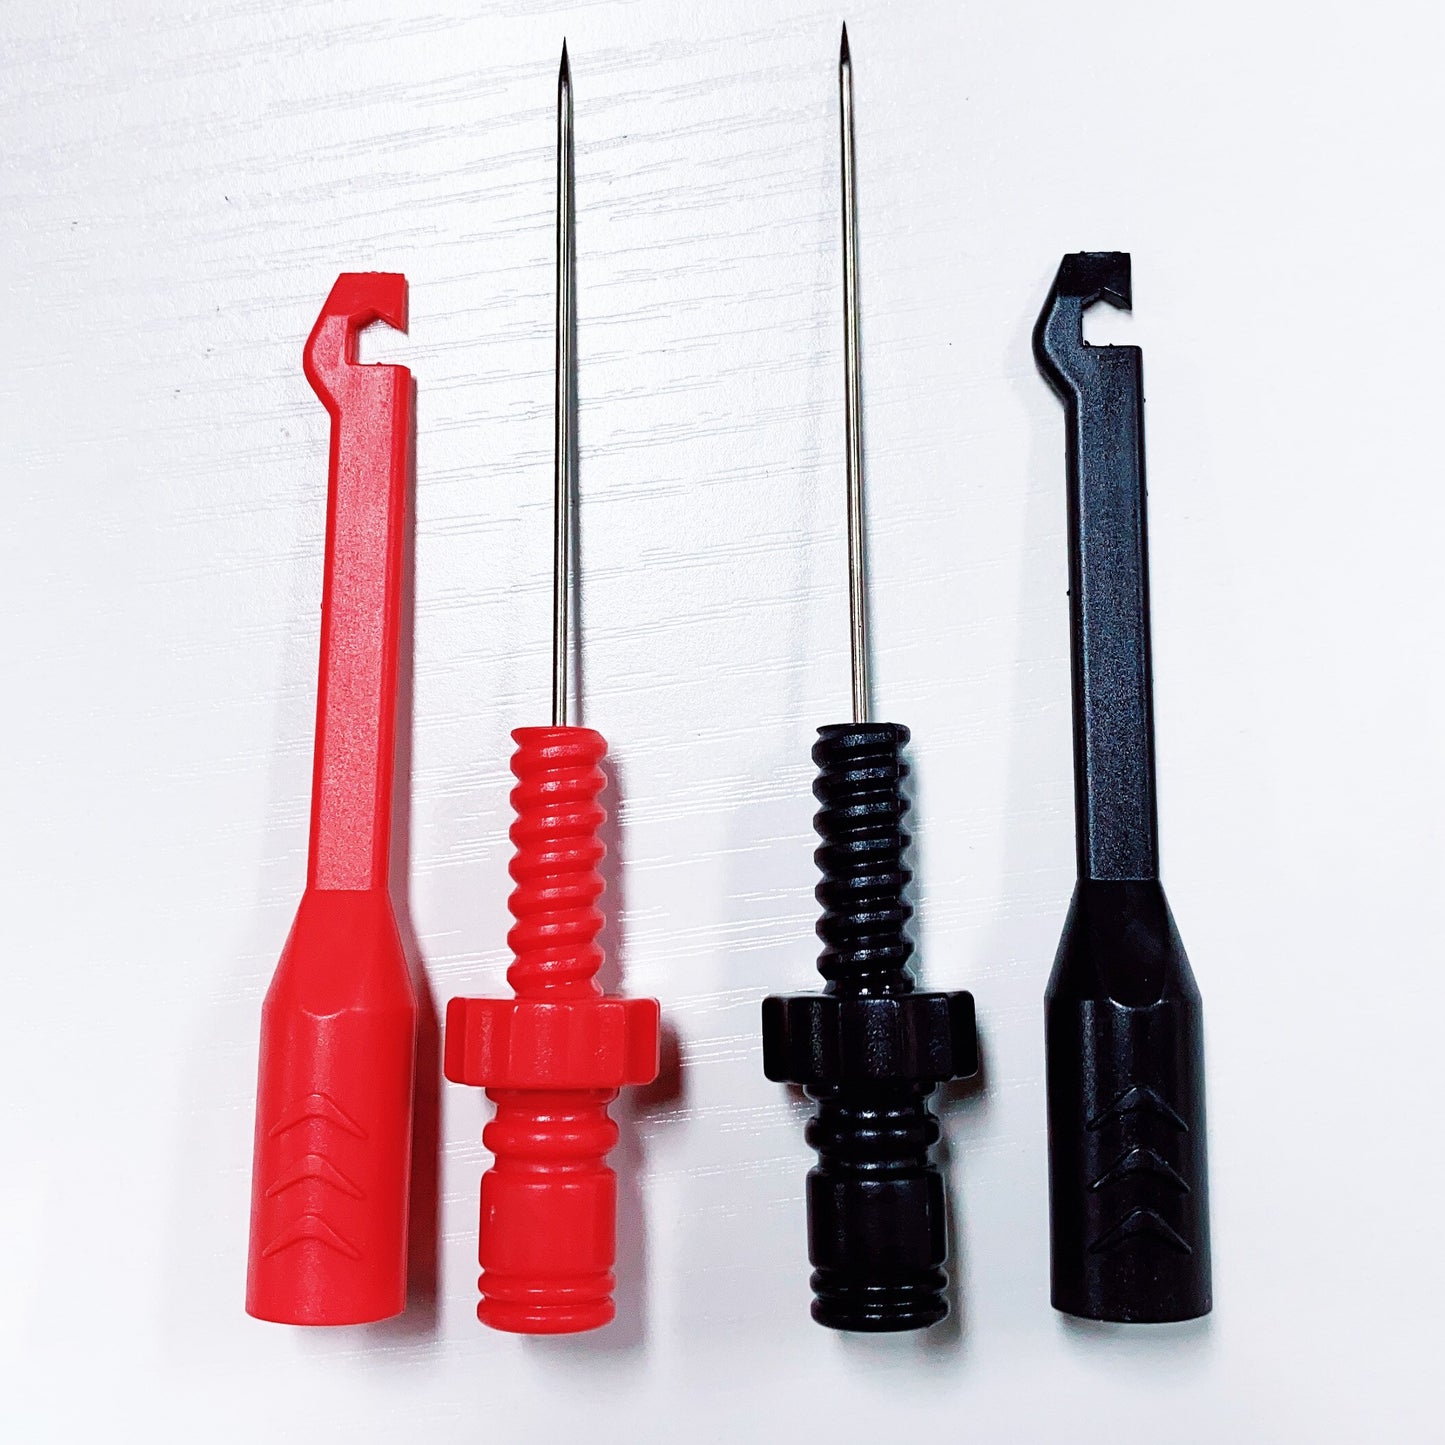 Diagnostic Tools Piercing Probes Multimeter Test Lead Extension Back Piercing Needle Tip Probes Automotive Tool diagnostic cable